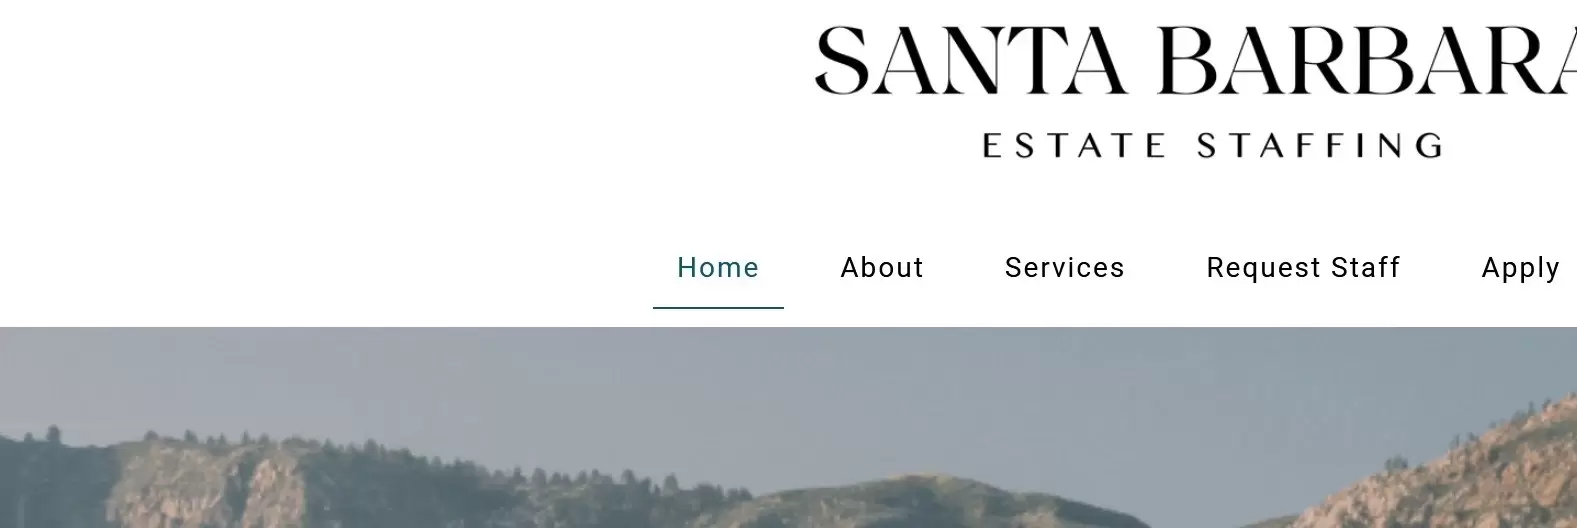 Santa Barbara Estate Staffing company profile and reviews